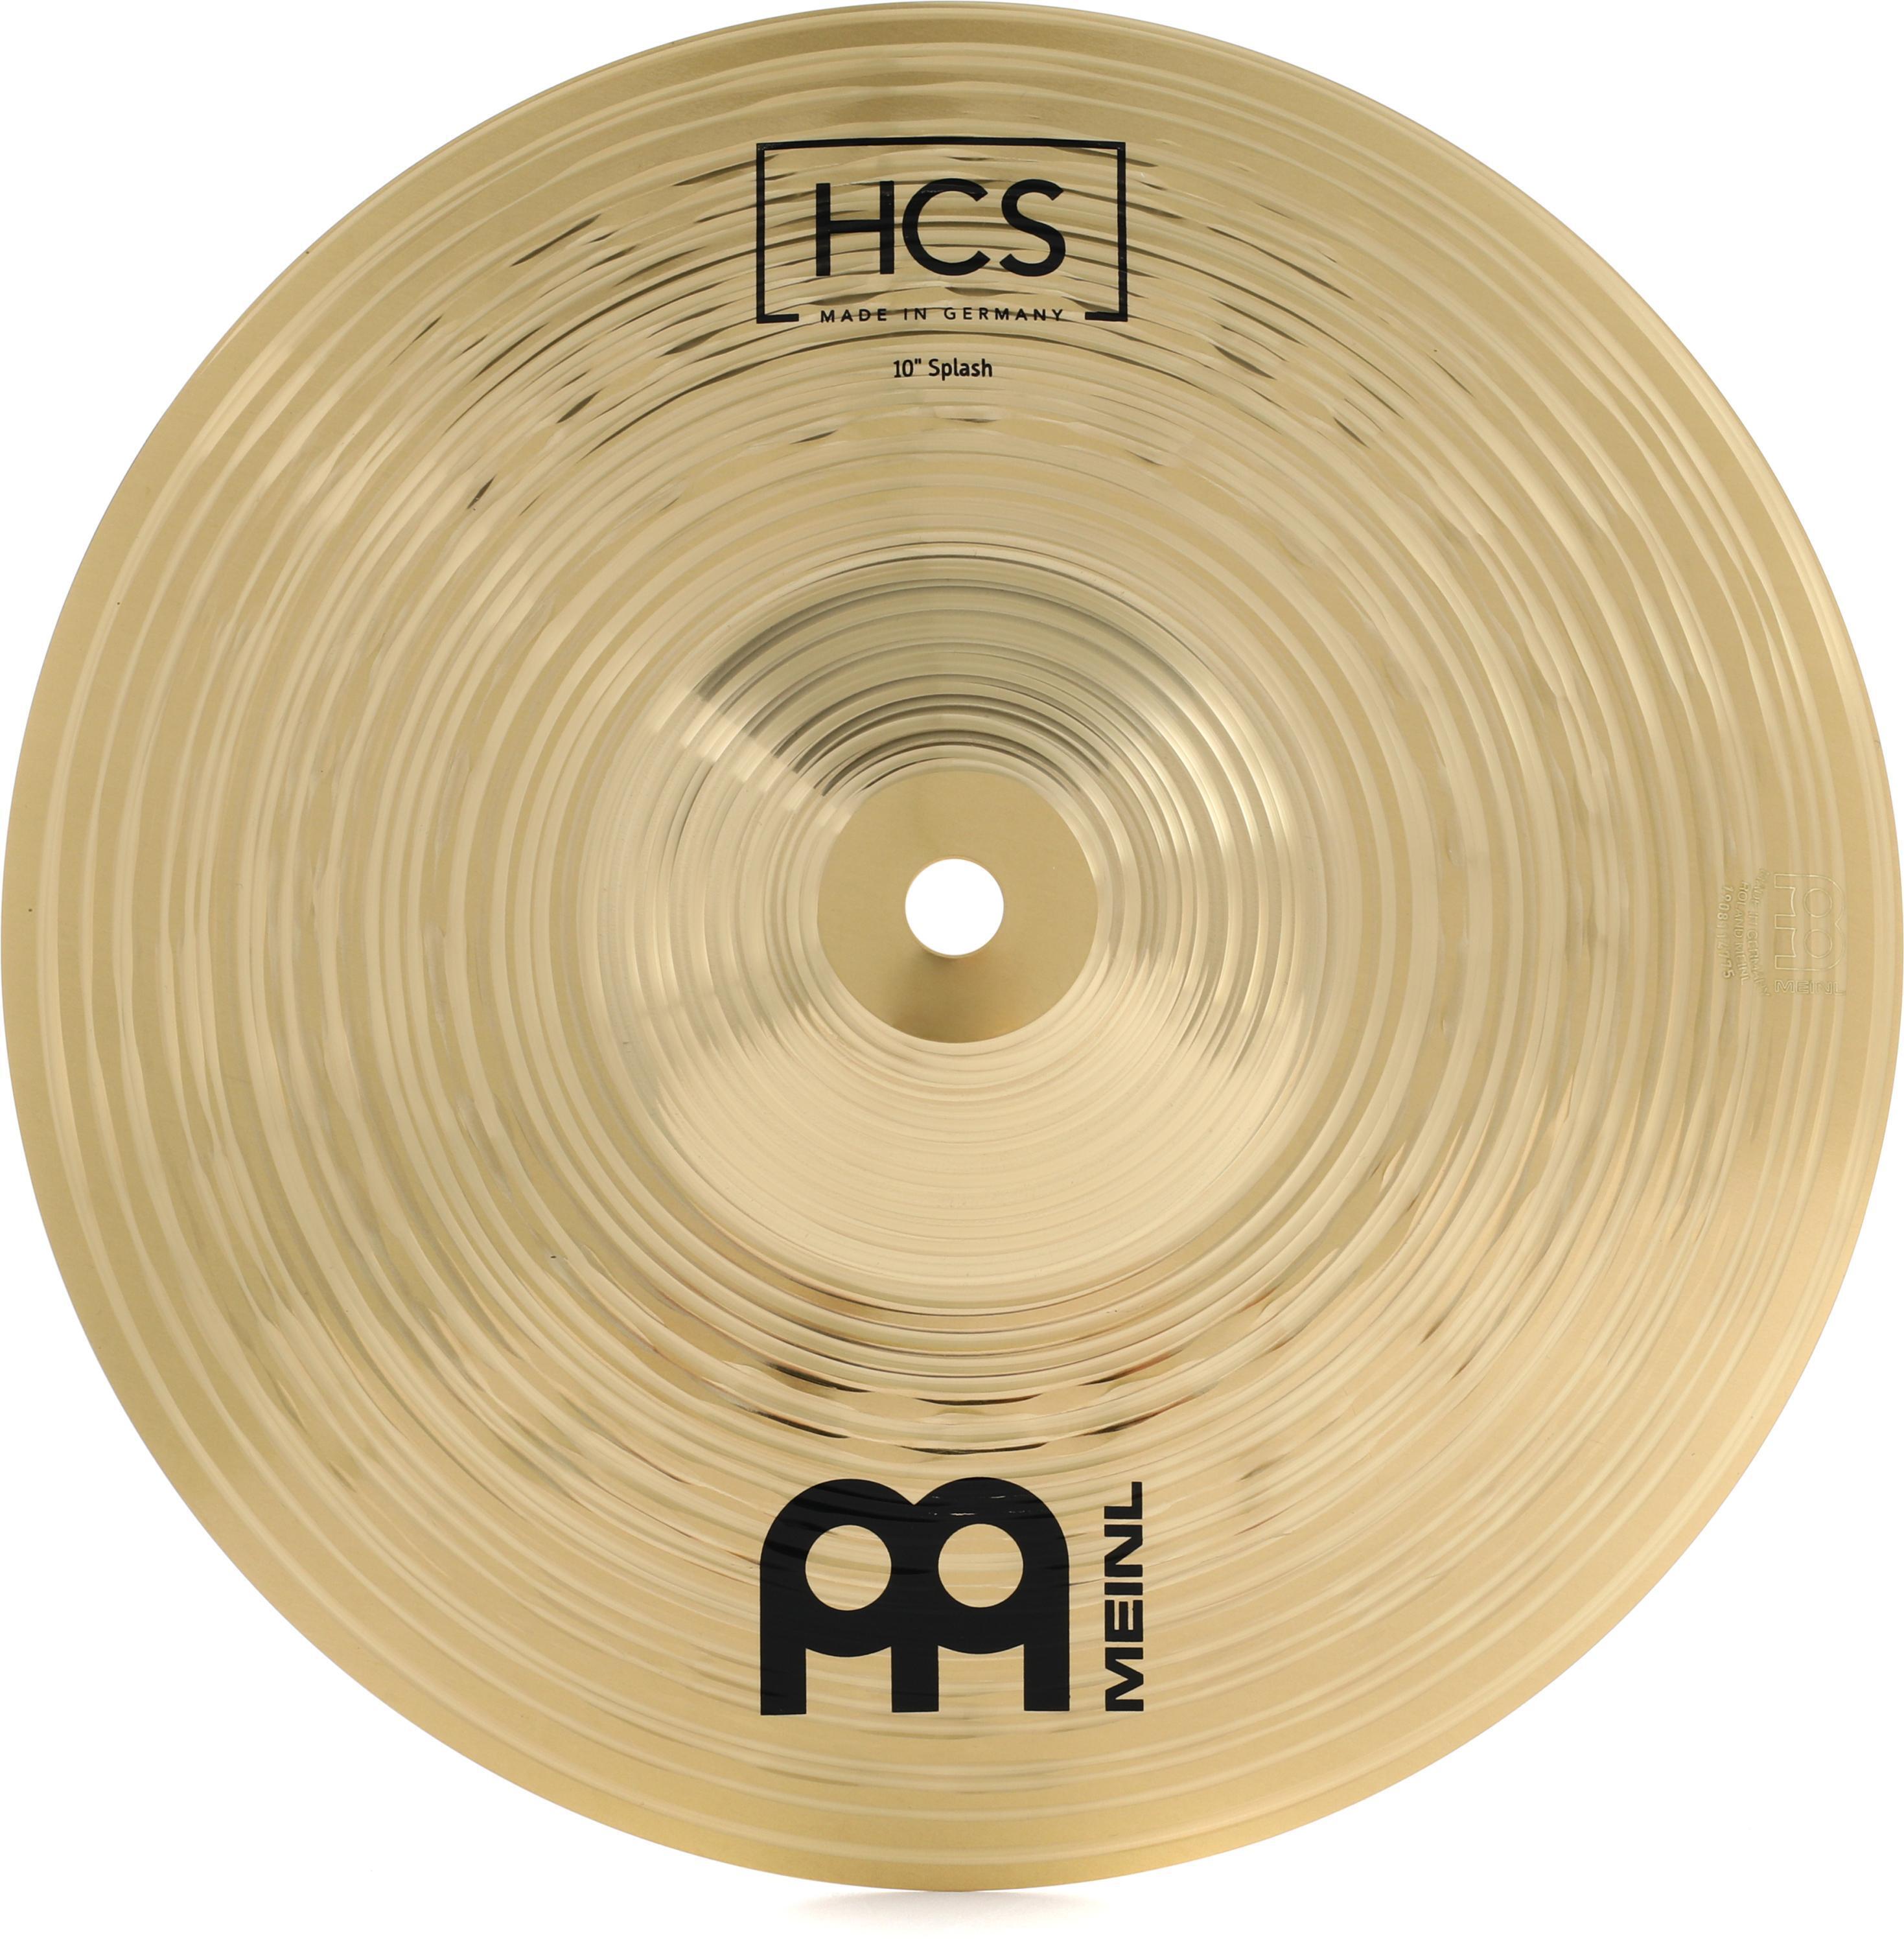 Bundled Item: Meinl Cymbals 10-inch HCS Splash Cymbal